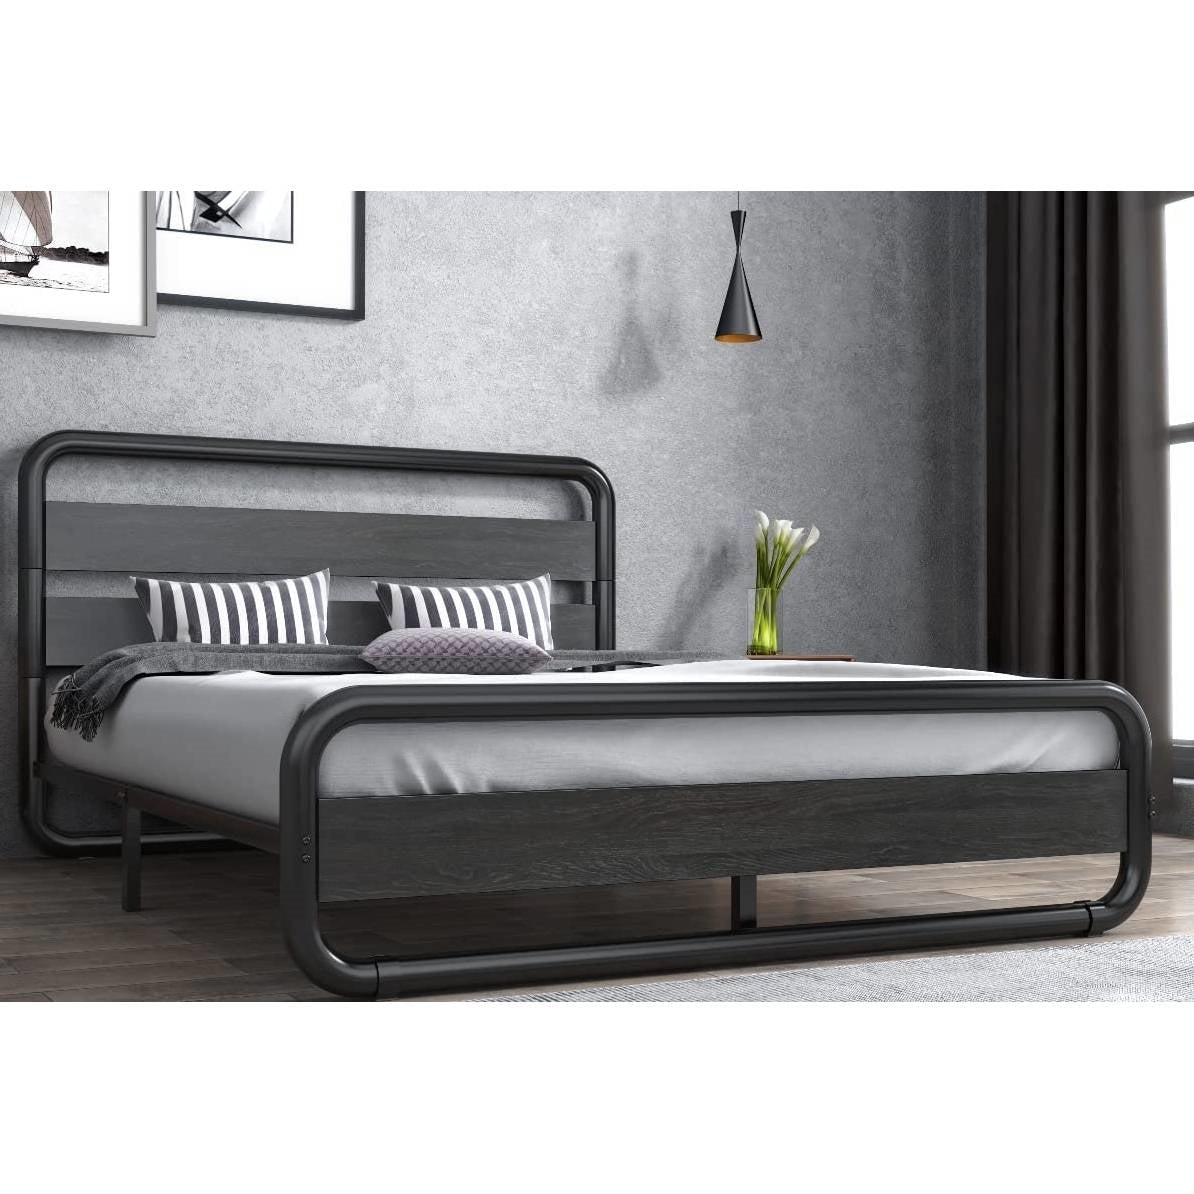 King Heavy Duty Round Metal Frame Platform Bed with Black Wood Panel Headboard